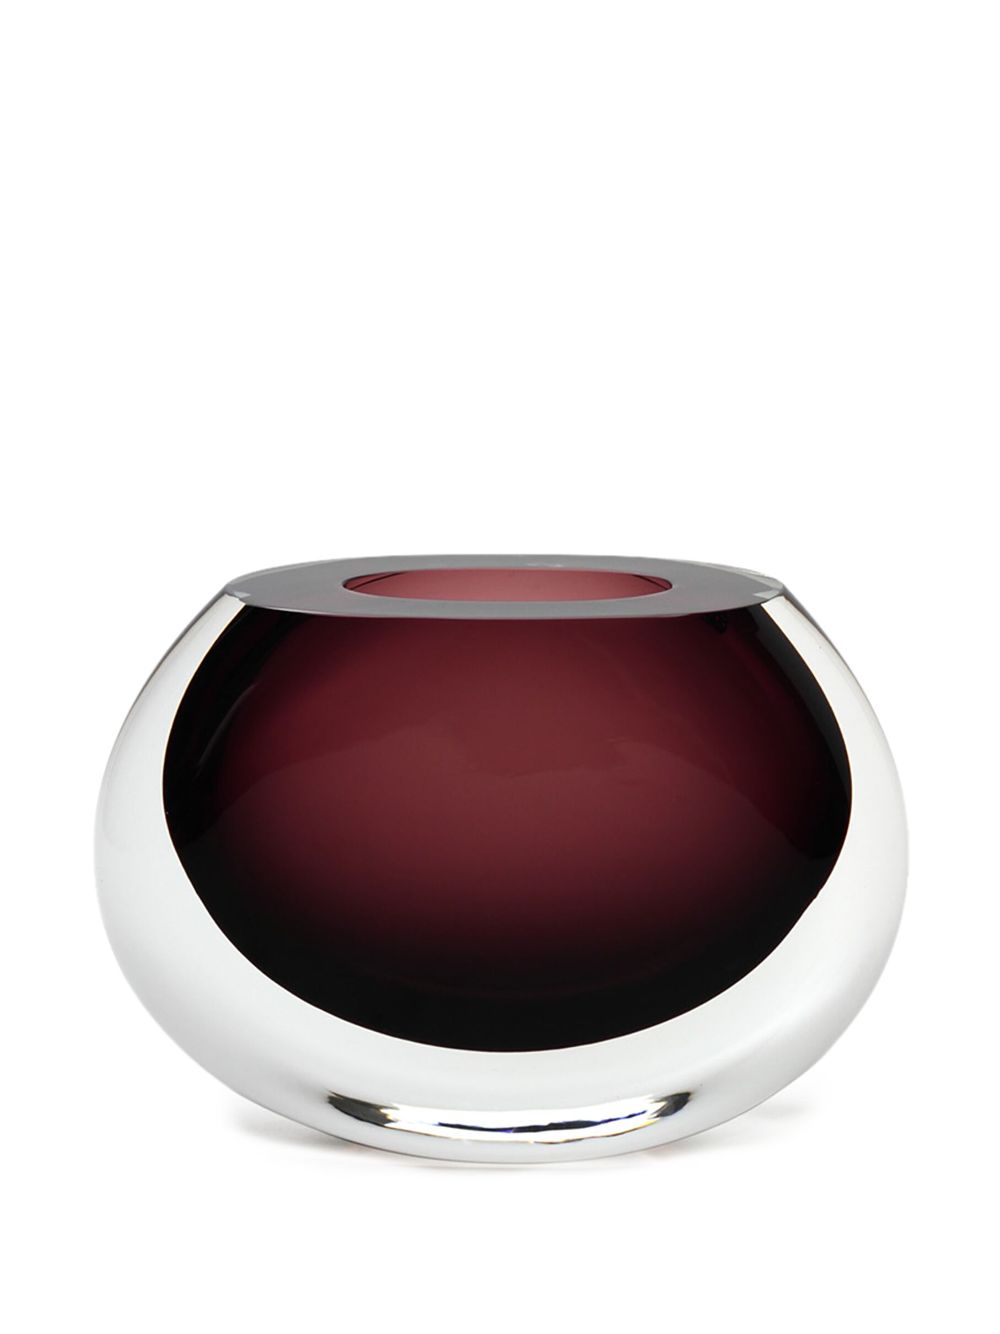 Shop Gardeco 92 Murano Glass Vase In Red